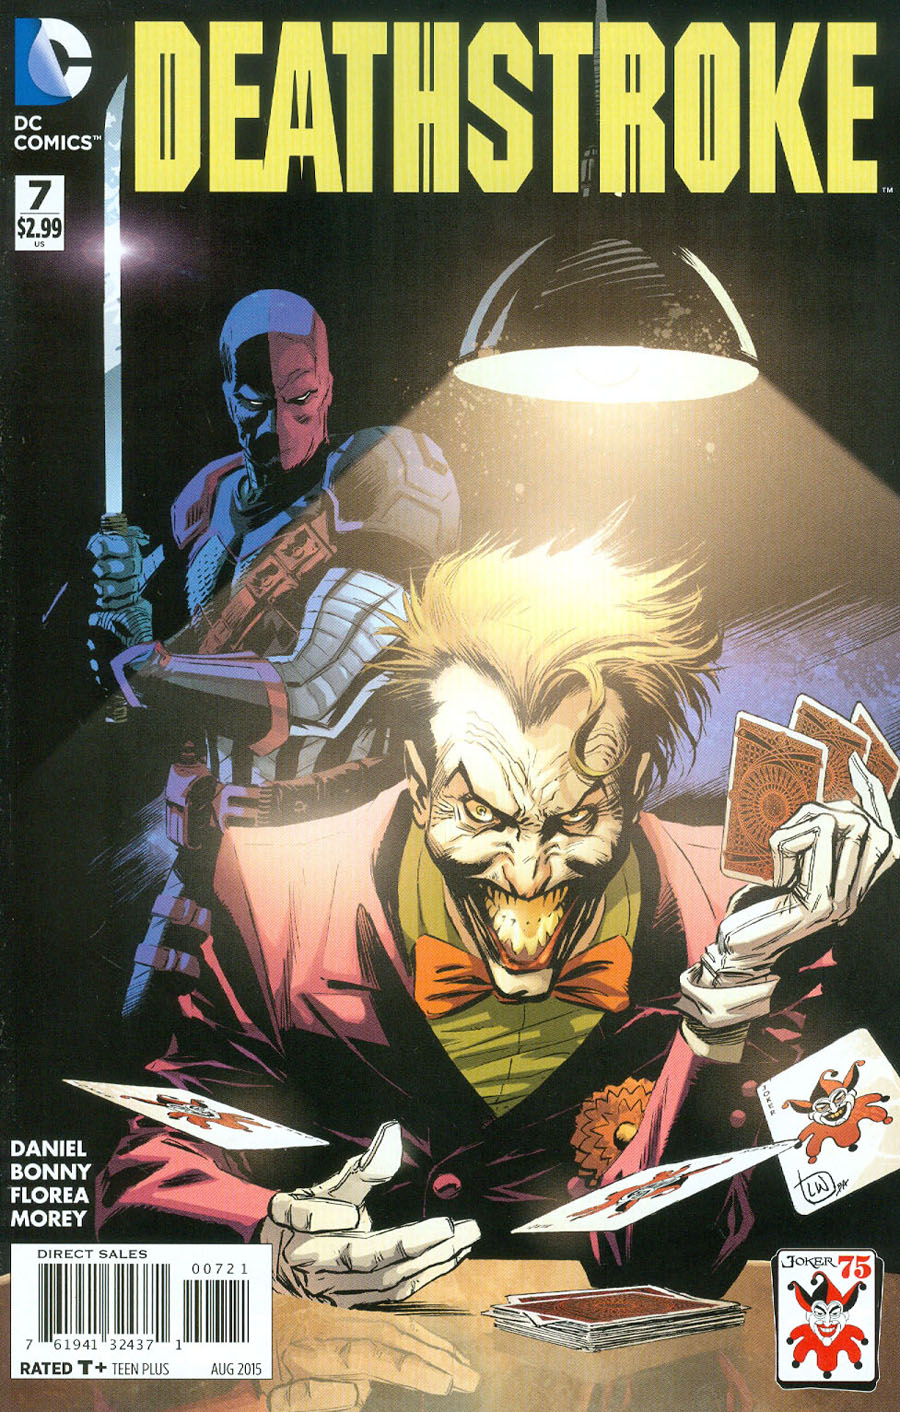 Deathstroke Vol 3 #7 Cover B Variant Lee Weeks The Joker 75th Anniversary Cover